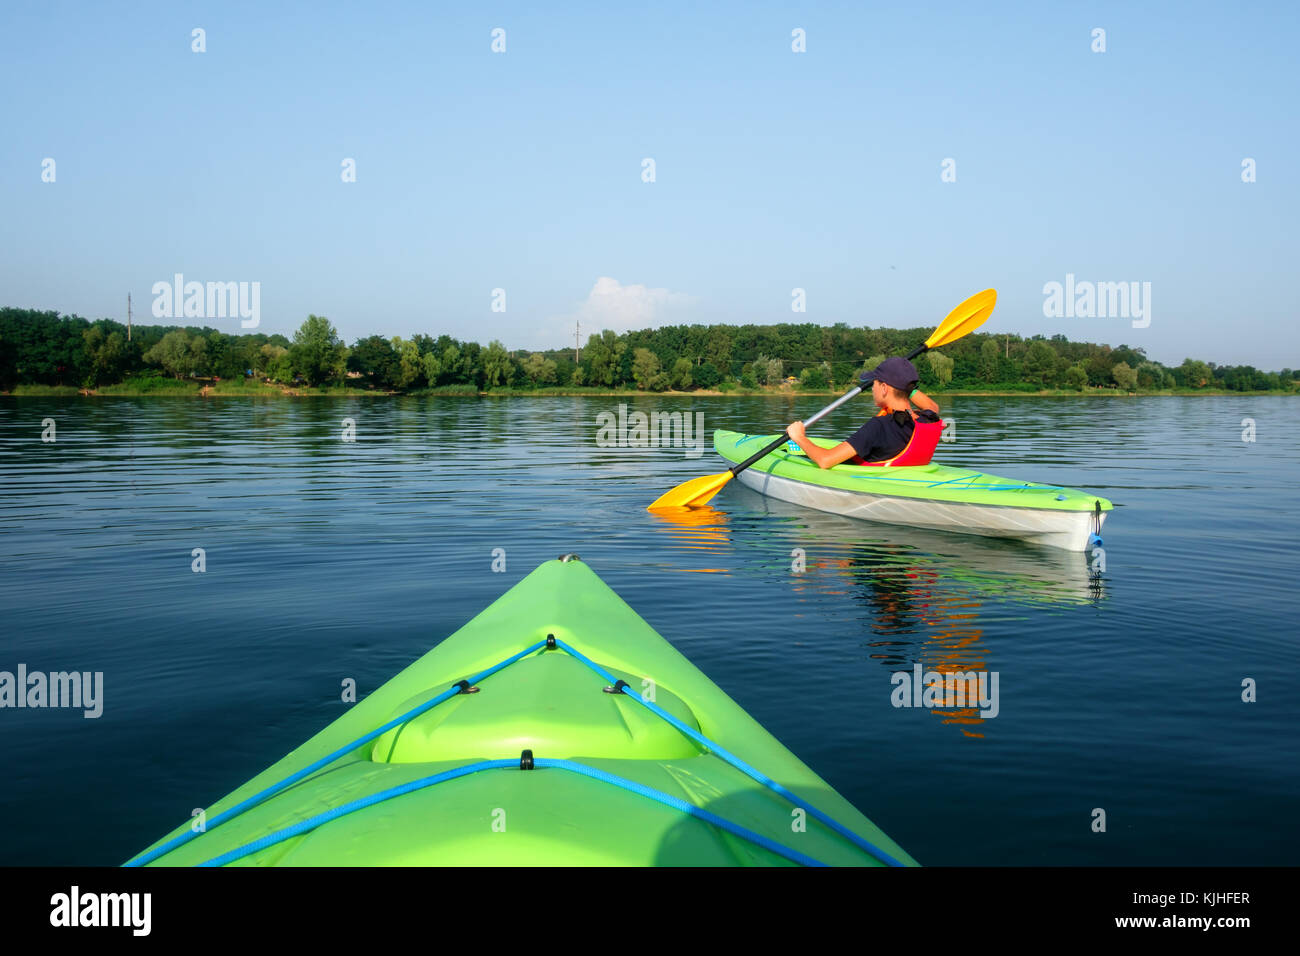 Boy in life jacket on green kayak Stock Photo